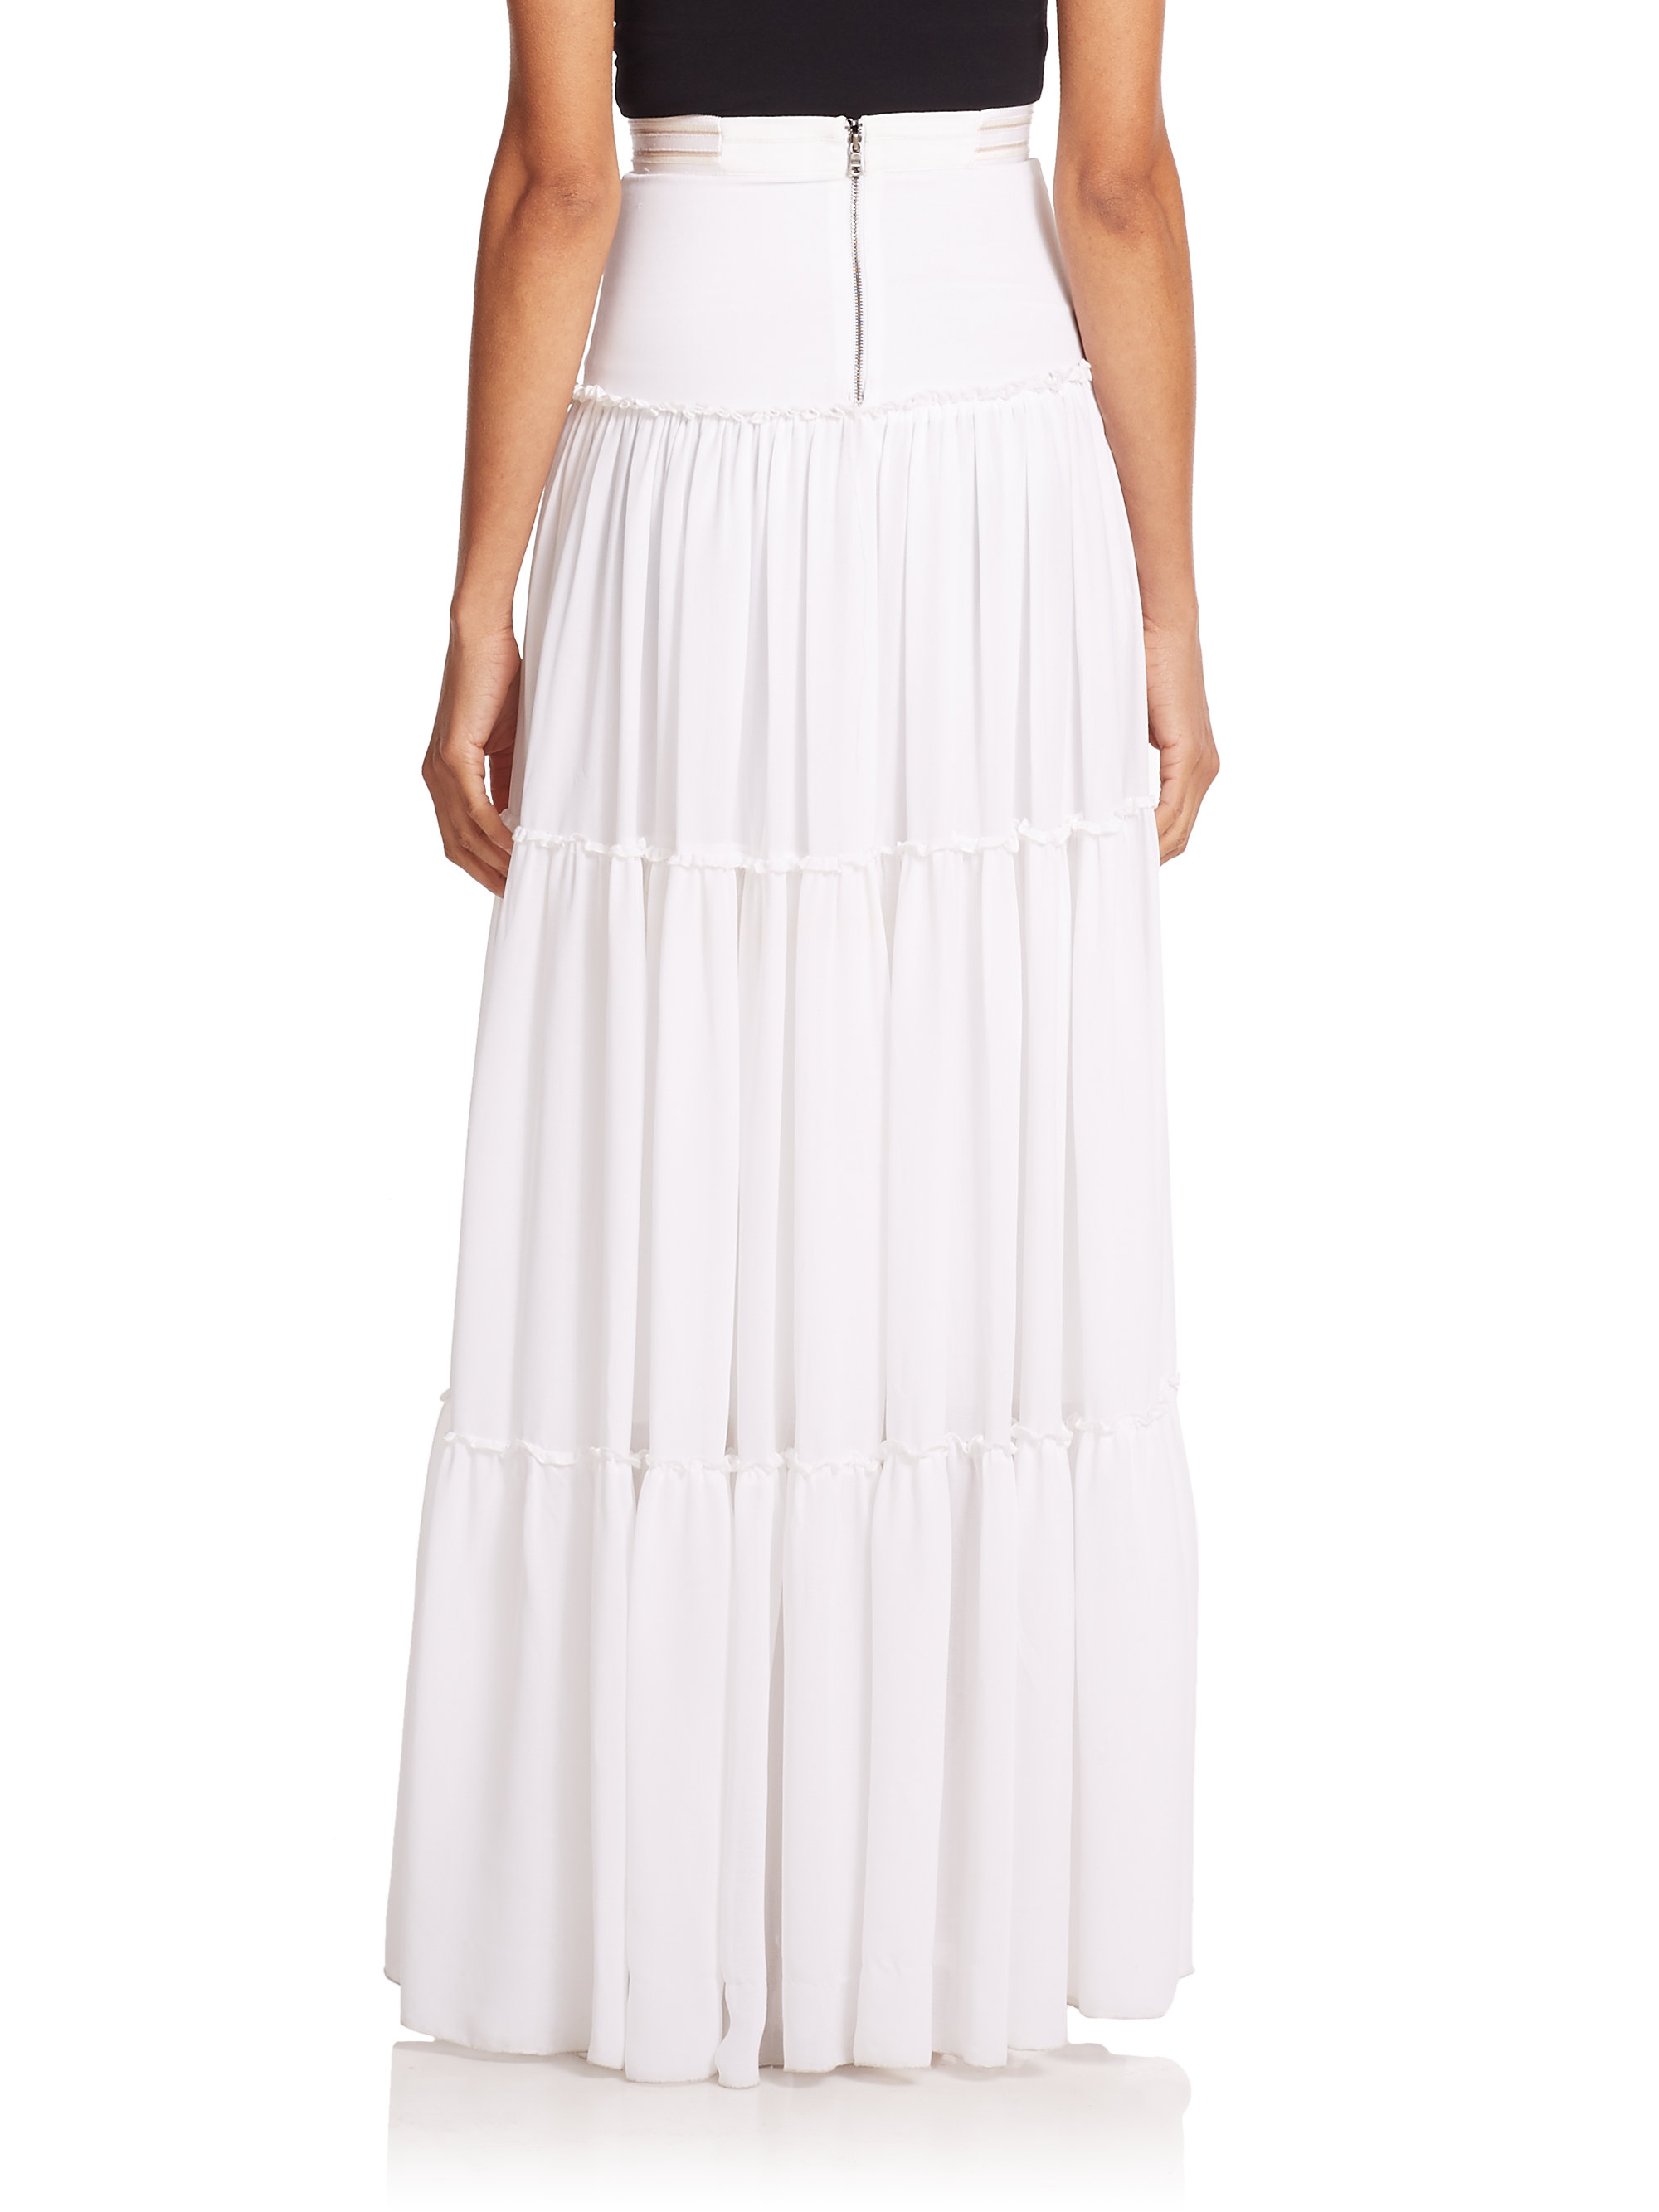 Alice + Olivia Synthetic Isobel Ruffle Maxi Skirt in White - Lyst